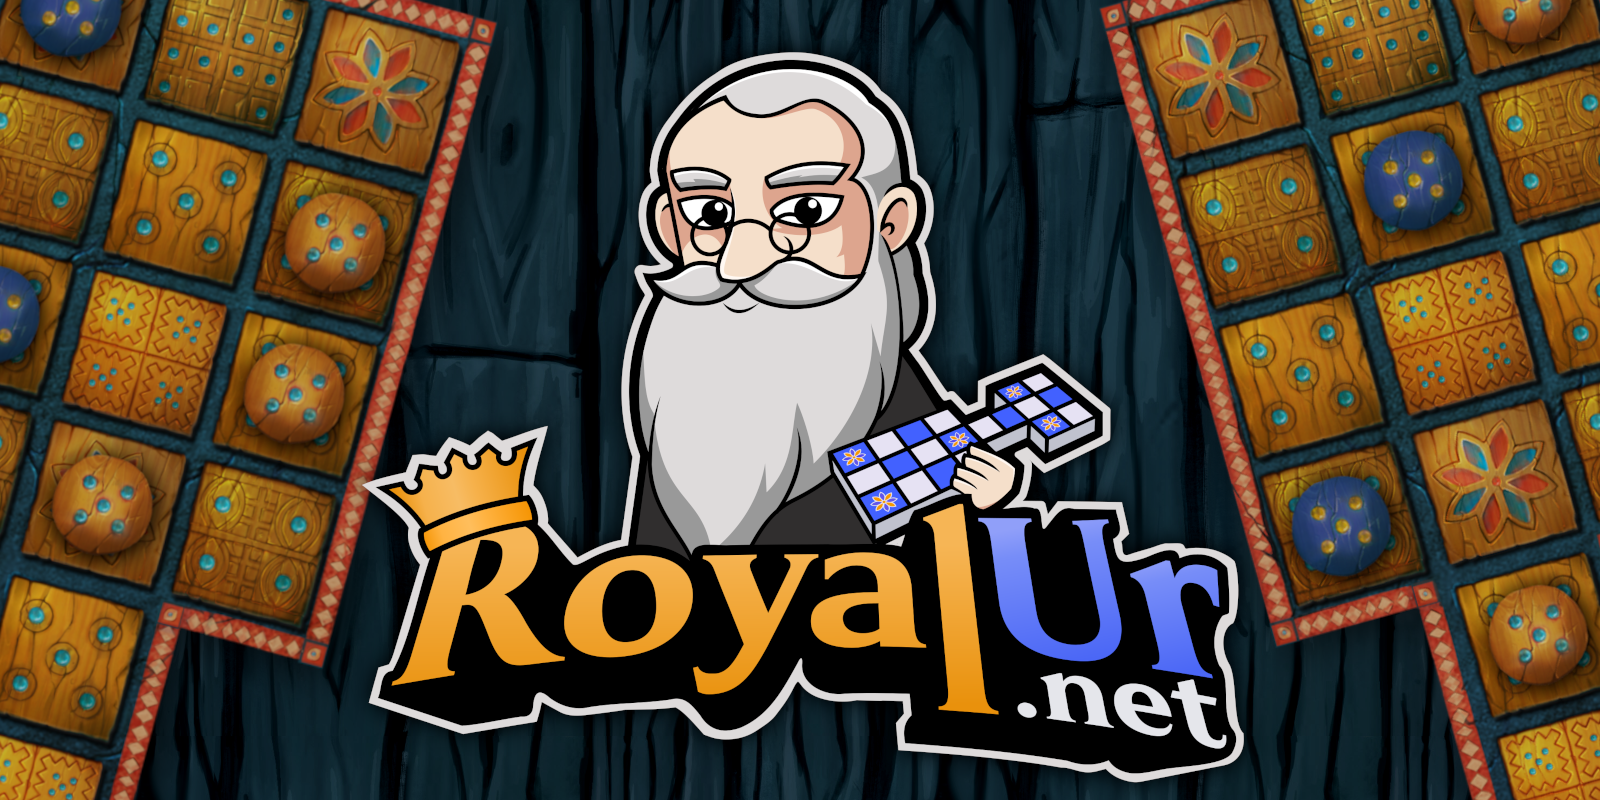 RoyalUr.net